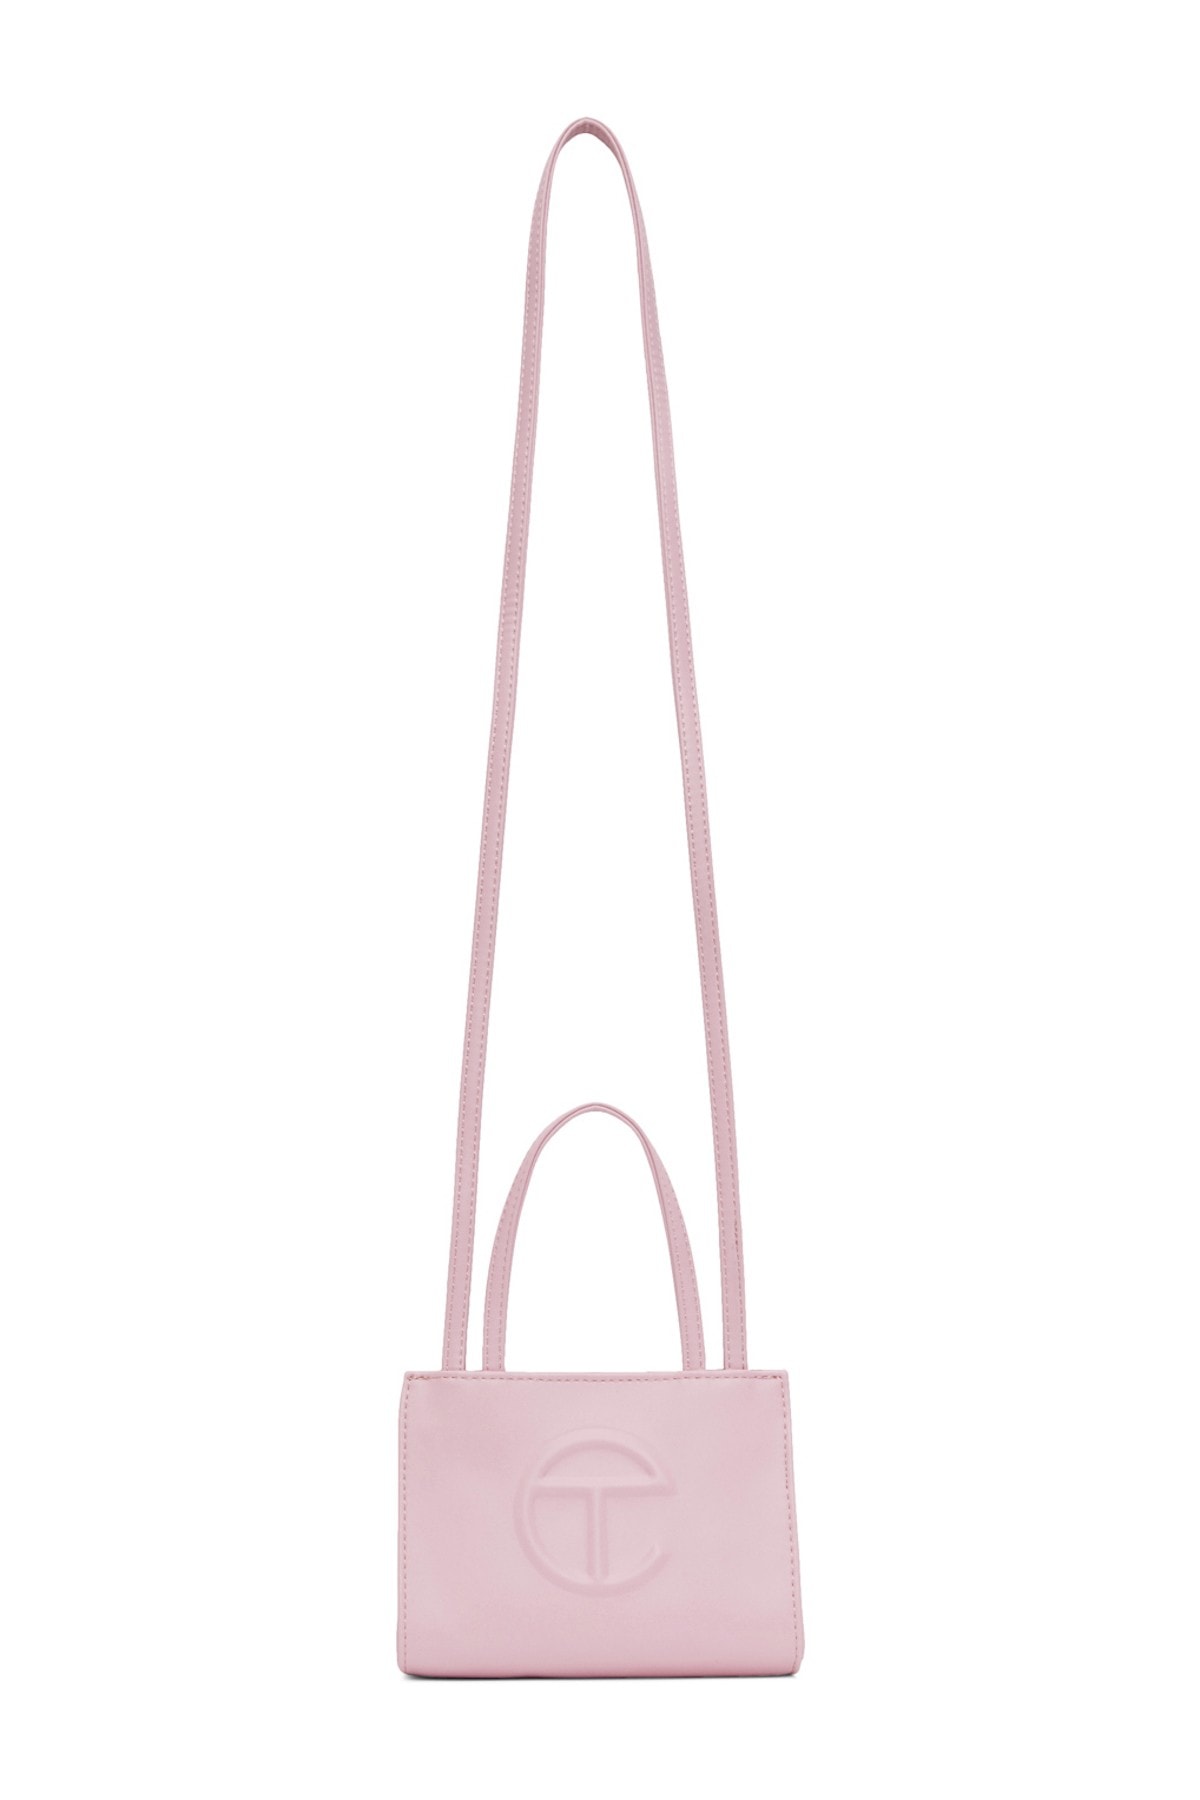 telfar logo bag pastel pink blue handbags release